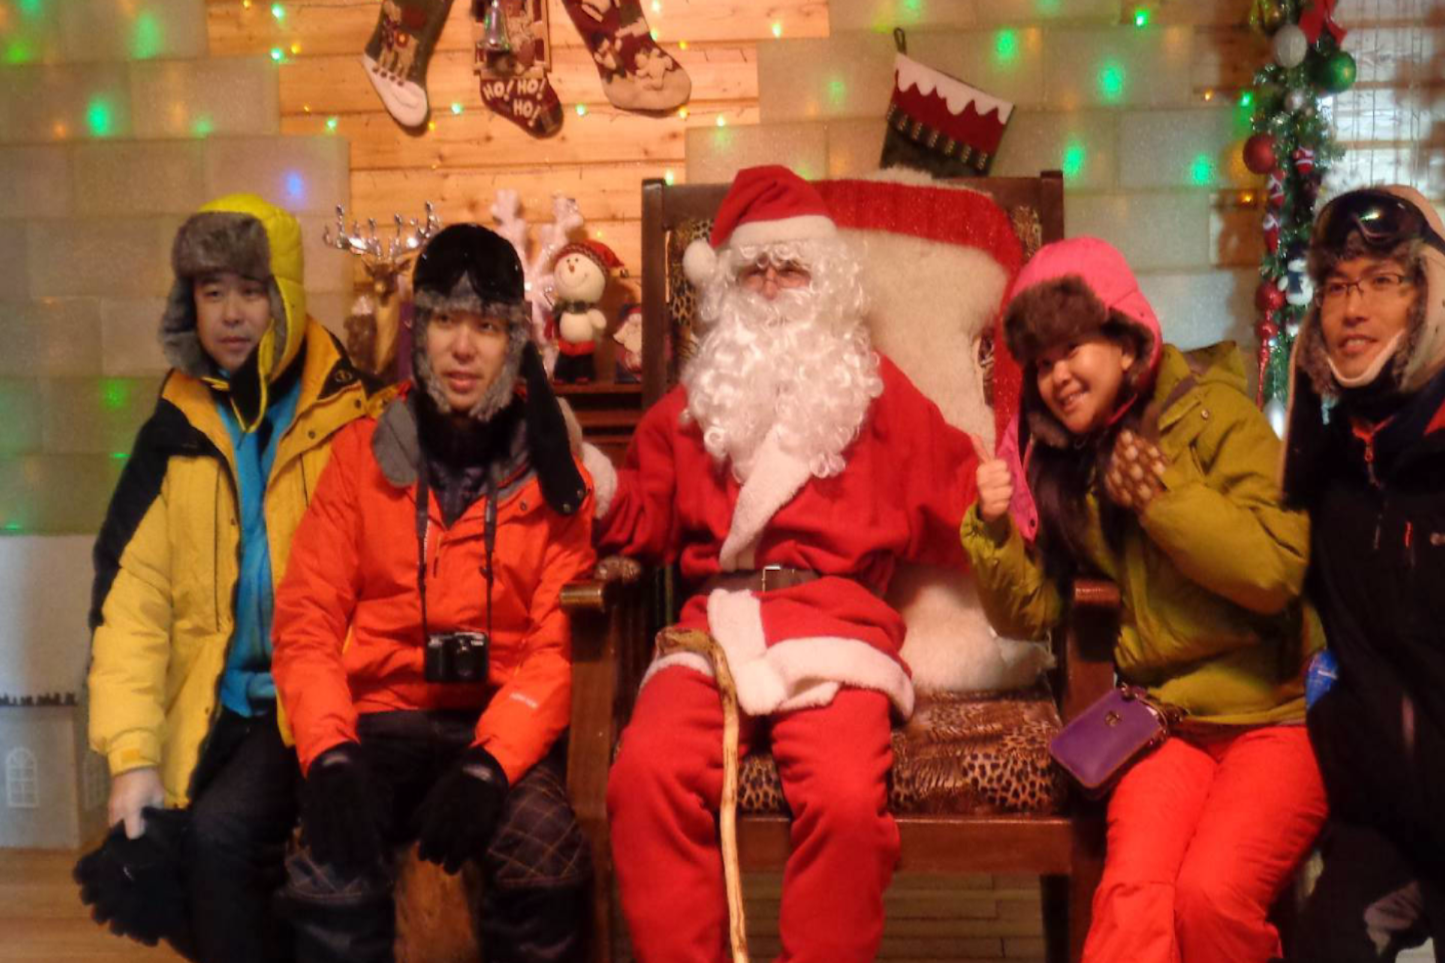 The 5th Finnish Santa Claus Sami